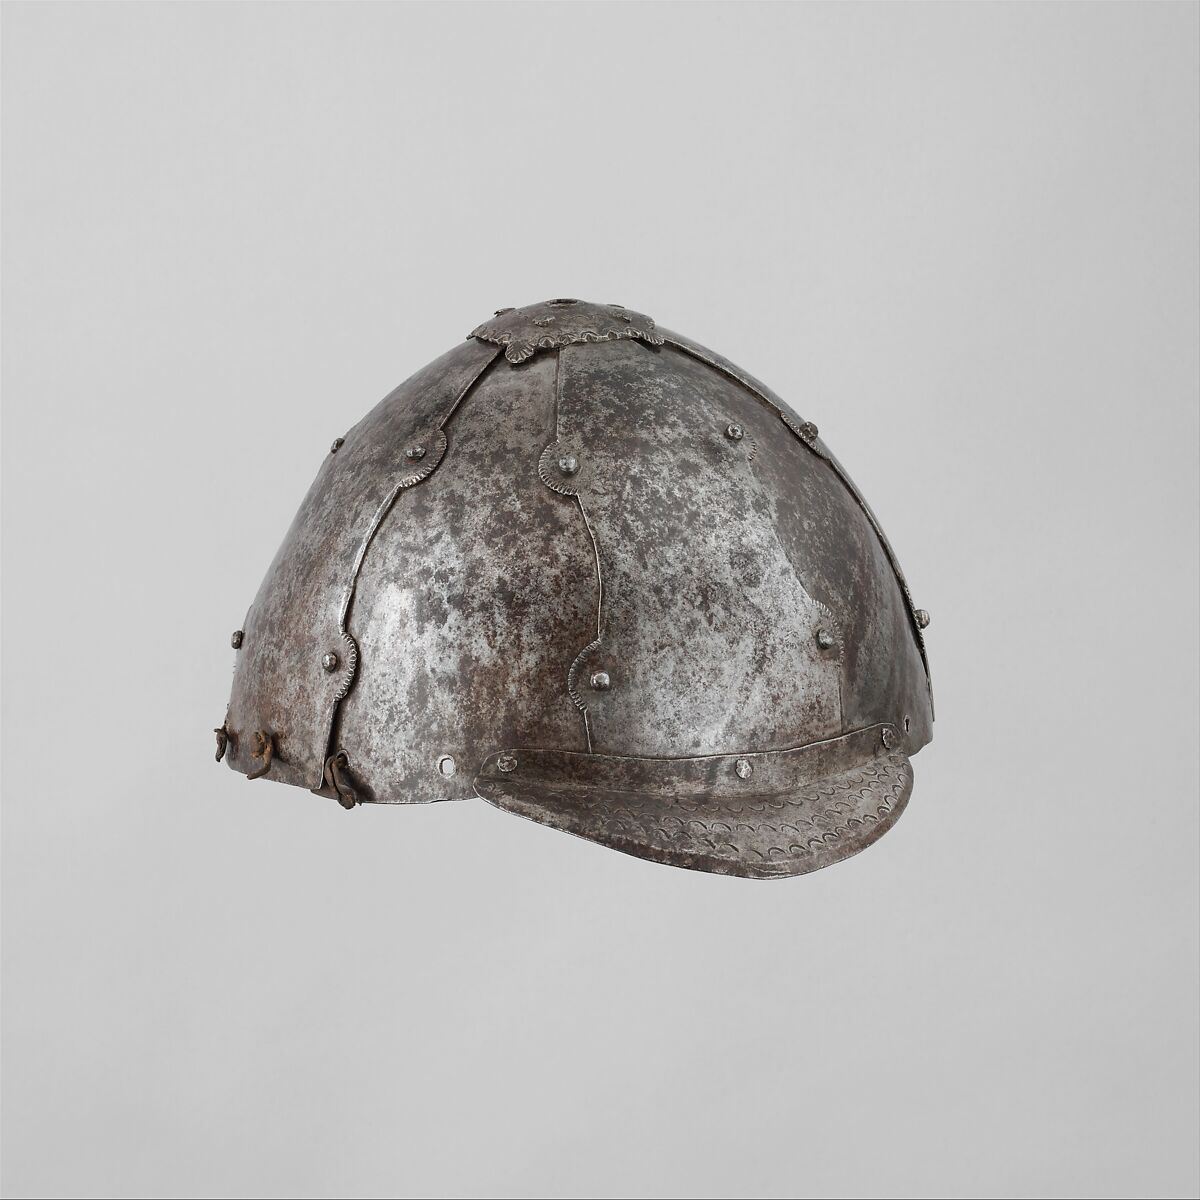 Helmet of Eight Plates in the Korean Style, Iron, leather, Korean or Mongolian 